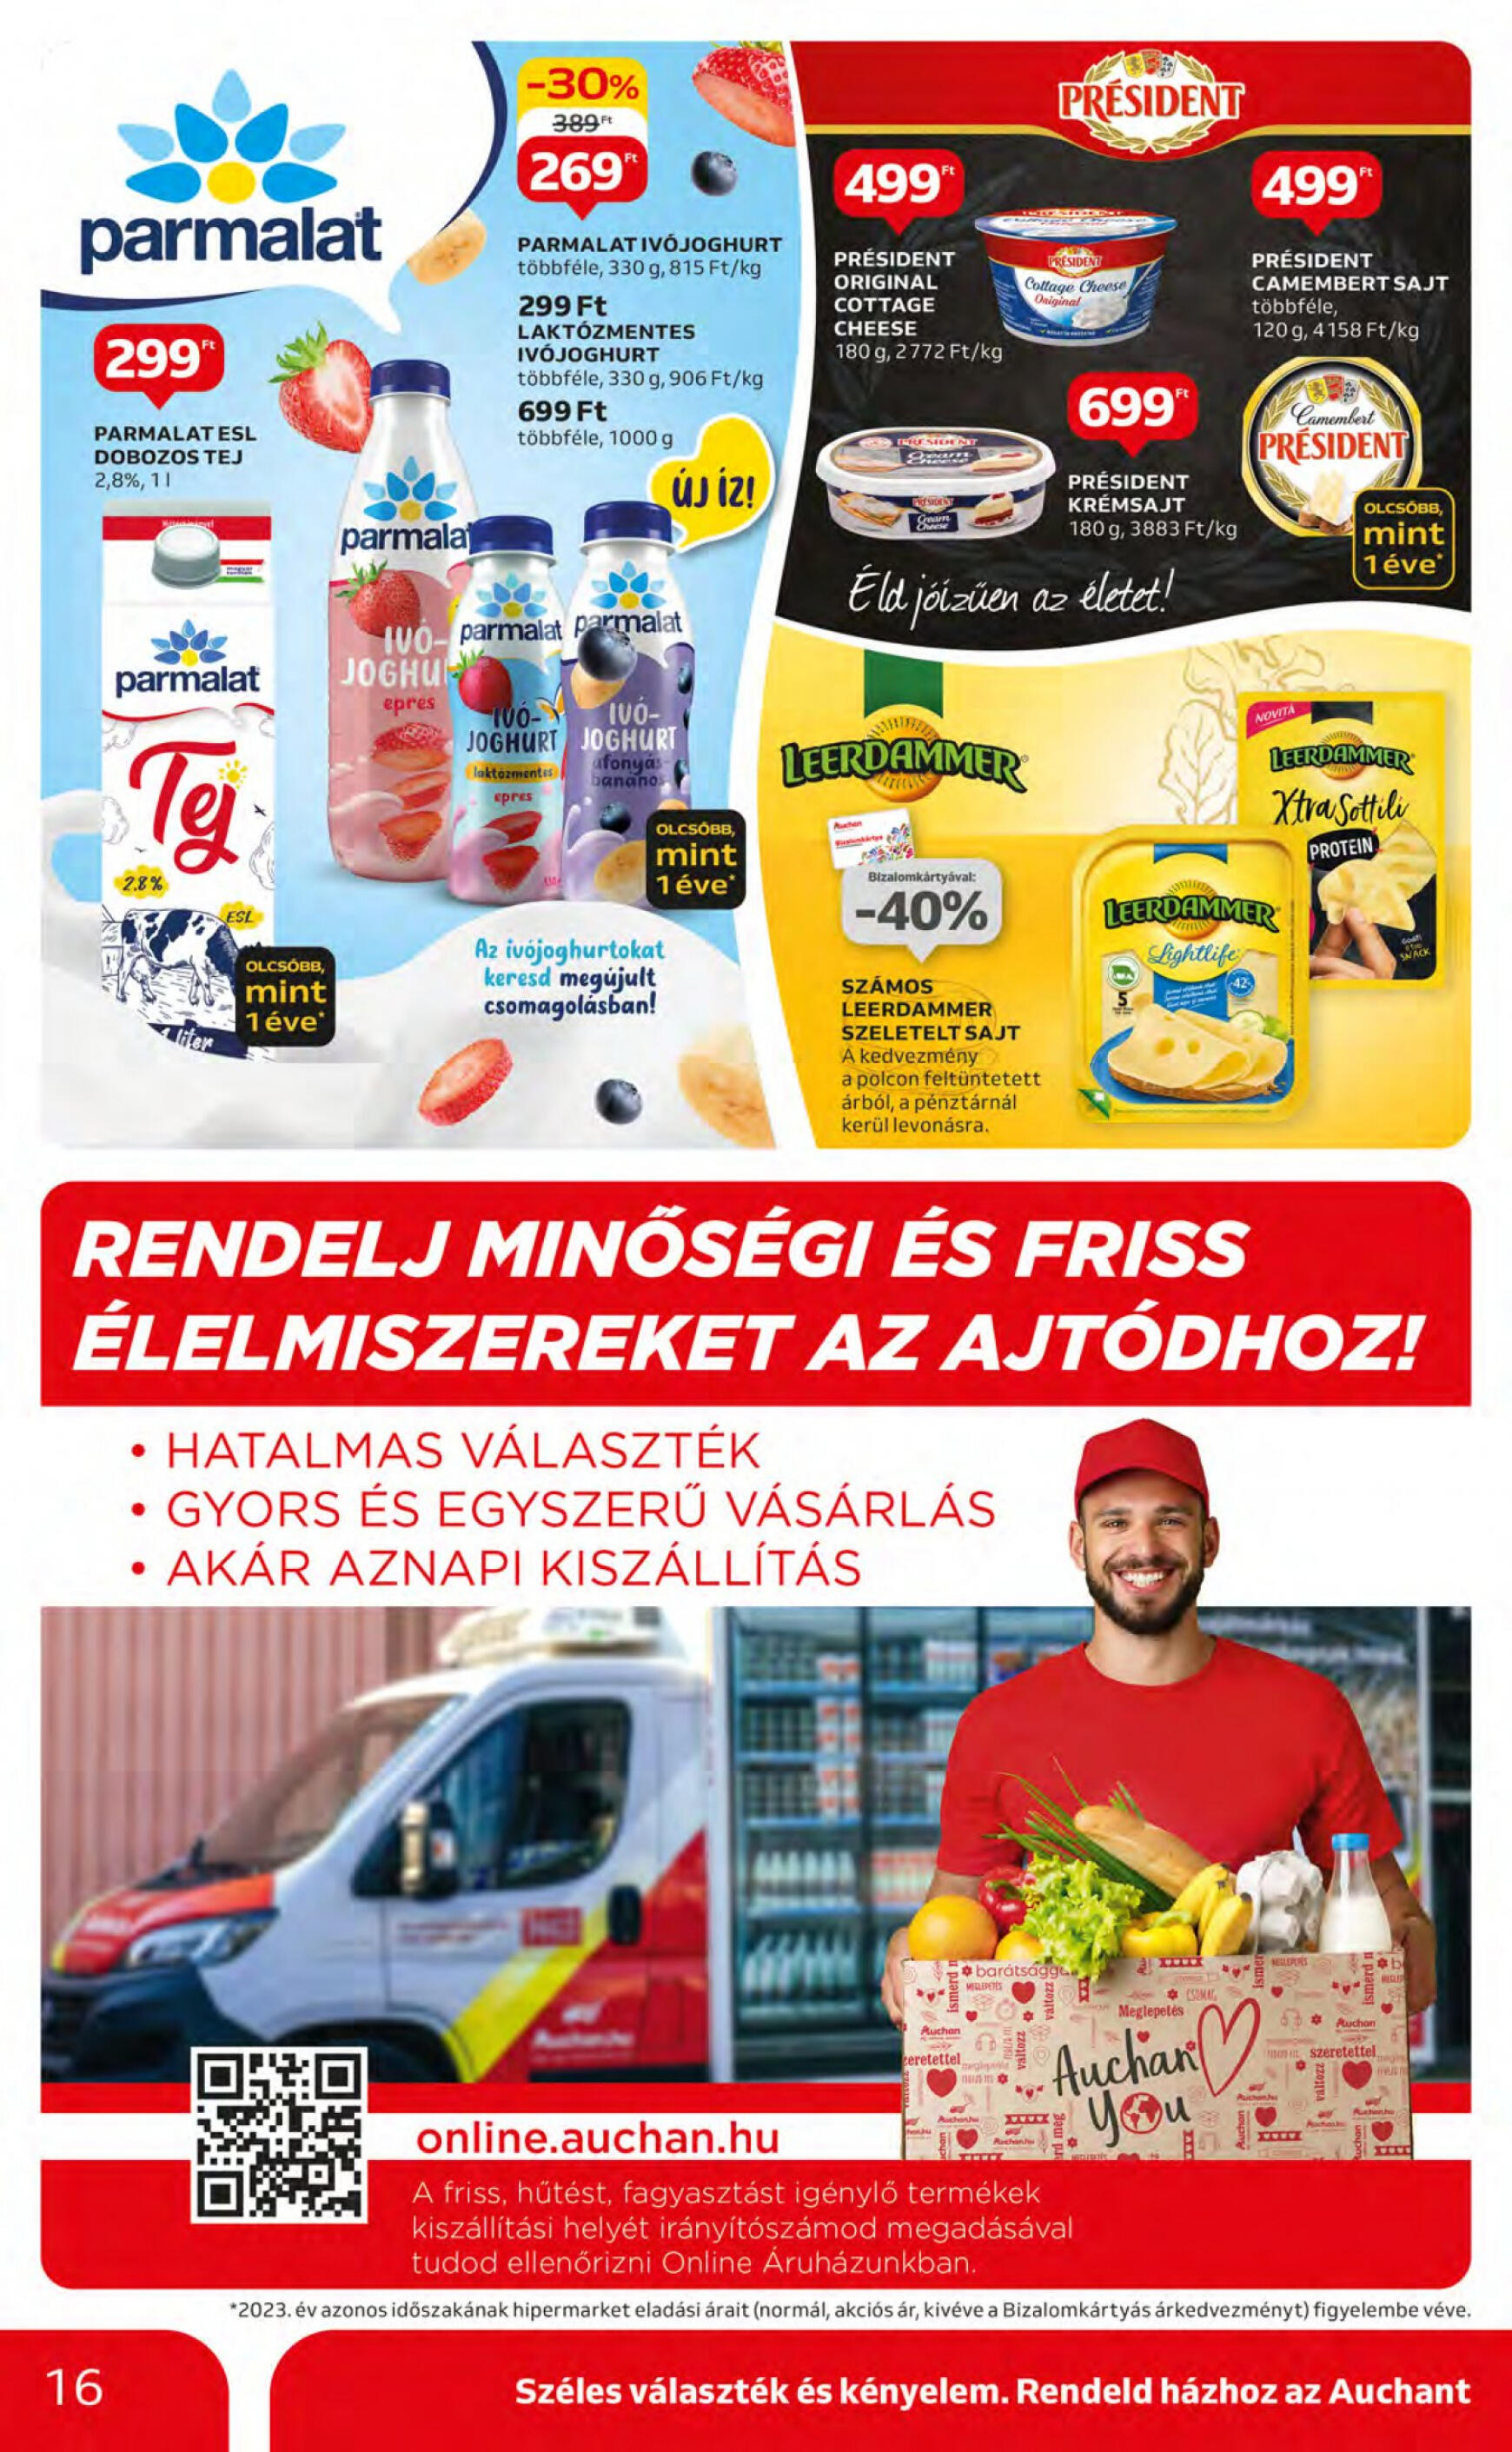 auchan - Aktuális újság Auchan 05.09. - 05.15. - page: 16